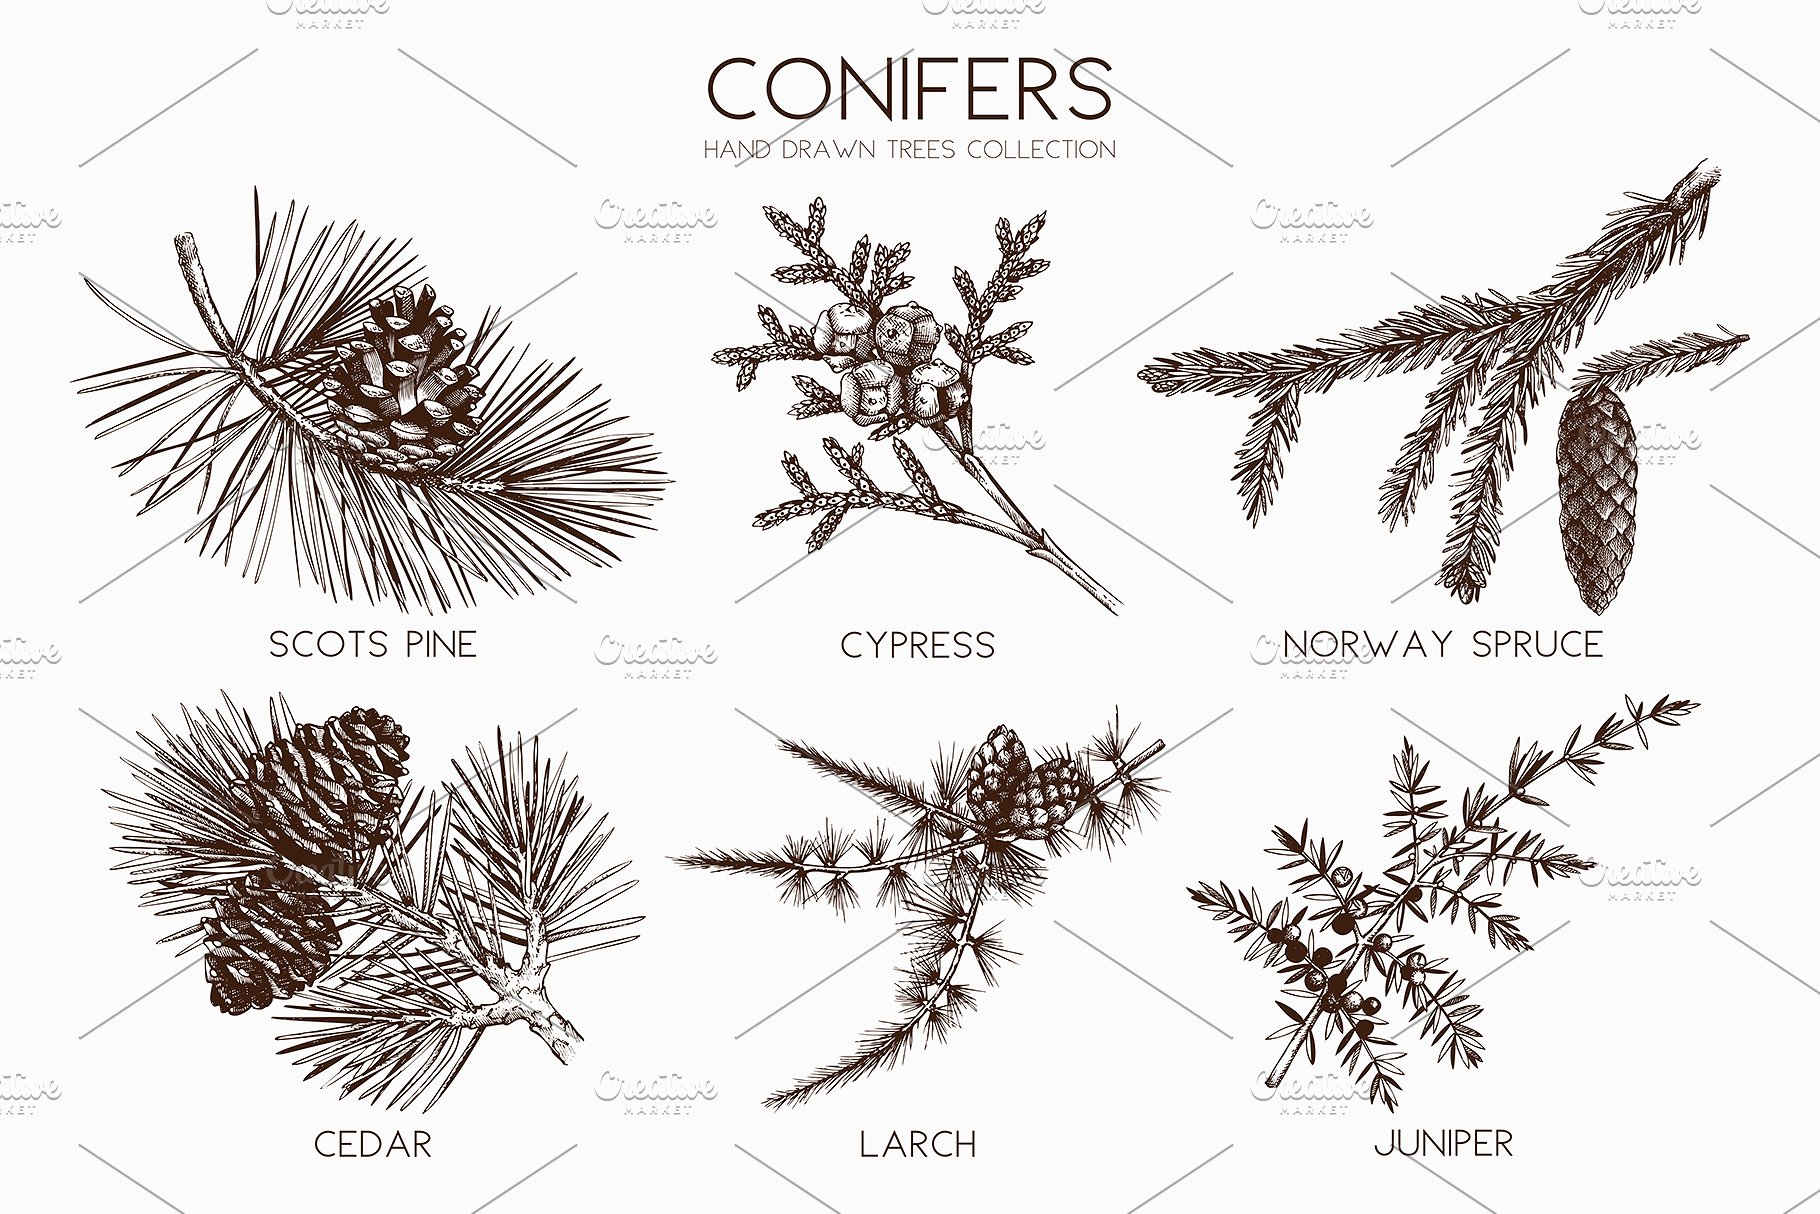 矢量针叶树图形素材集 Vector Conifer Trees Collection插图(2)